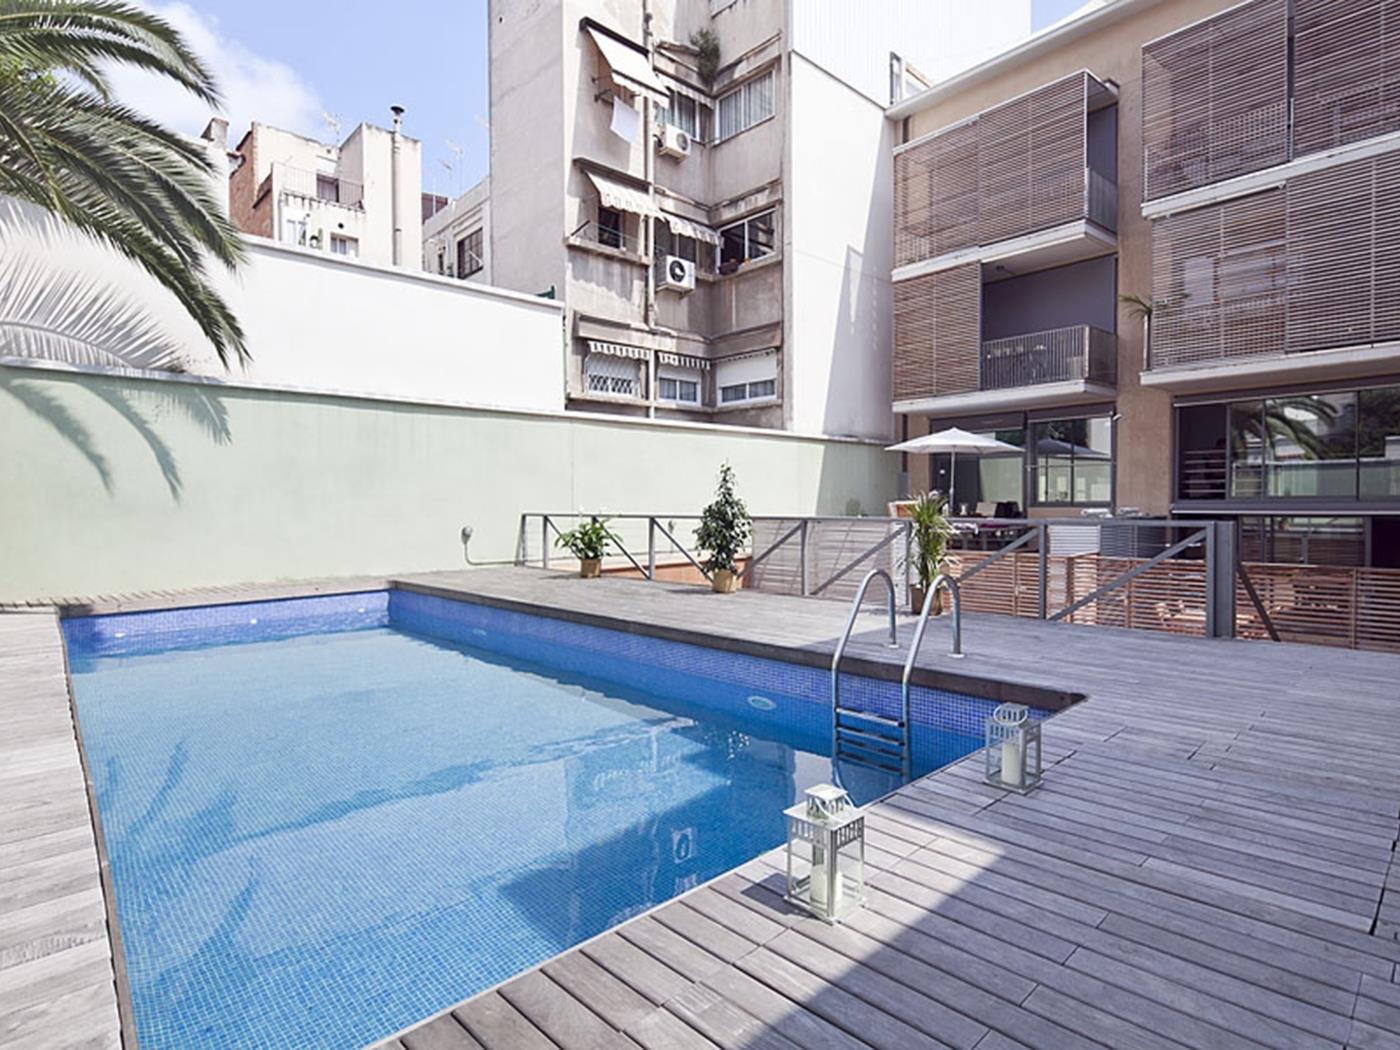 My Space Barcelona Penthouse in Gracia Pool and Terrace near Sagrada Familia - My Space Barcelona Apartments